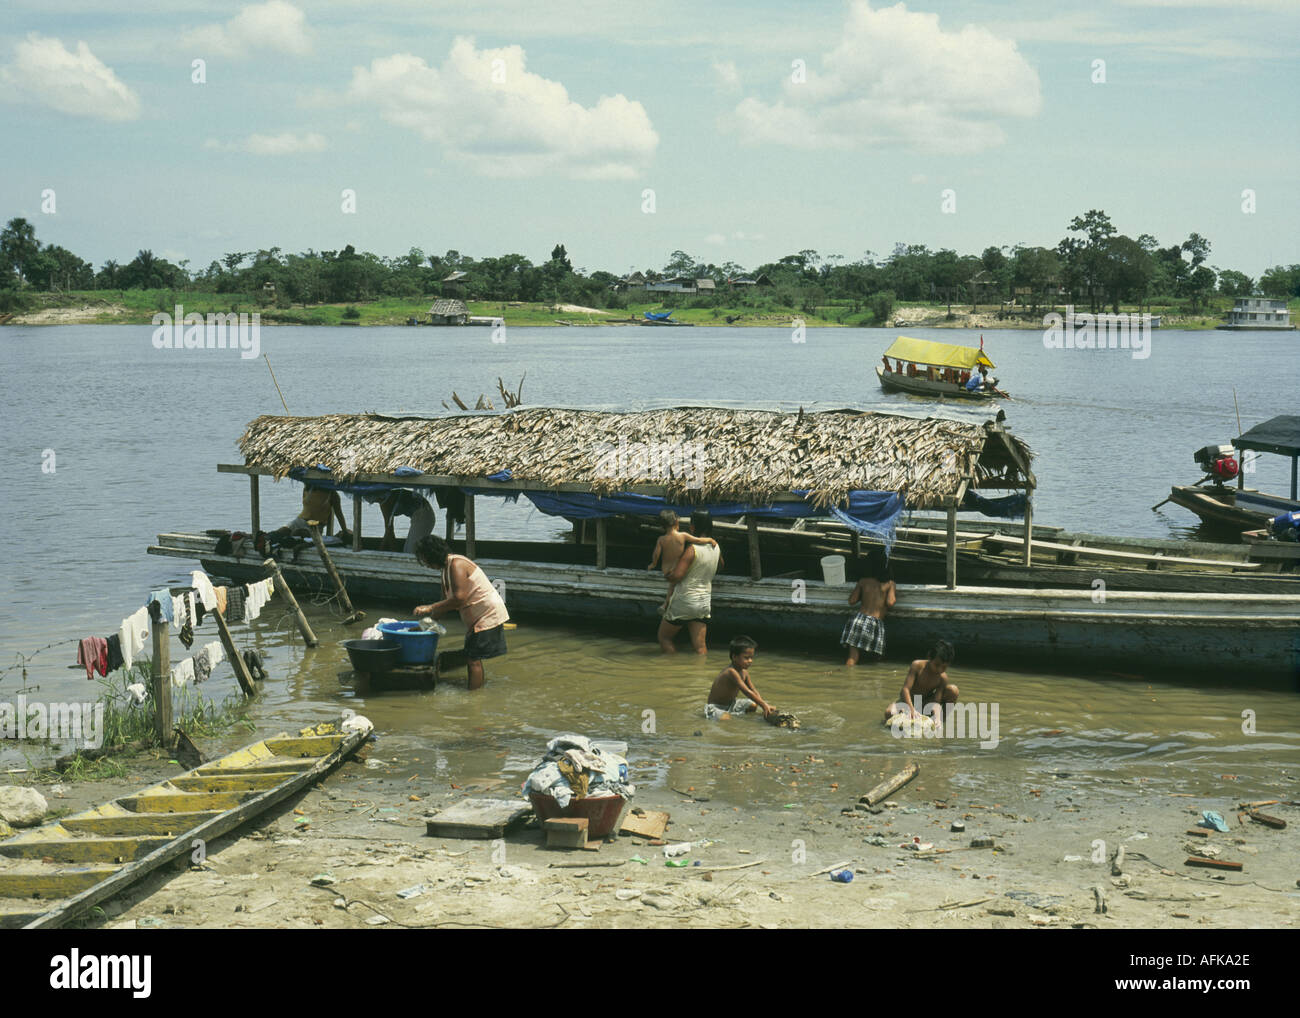 Nanay jungle river and craft Iquitos Peru 2004 Stock Photo